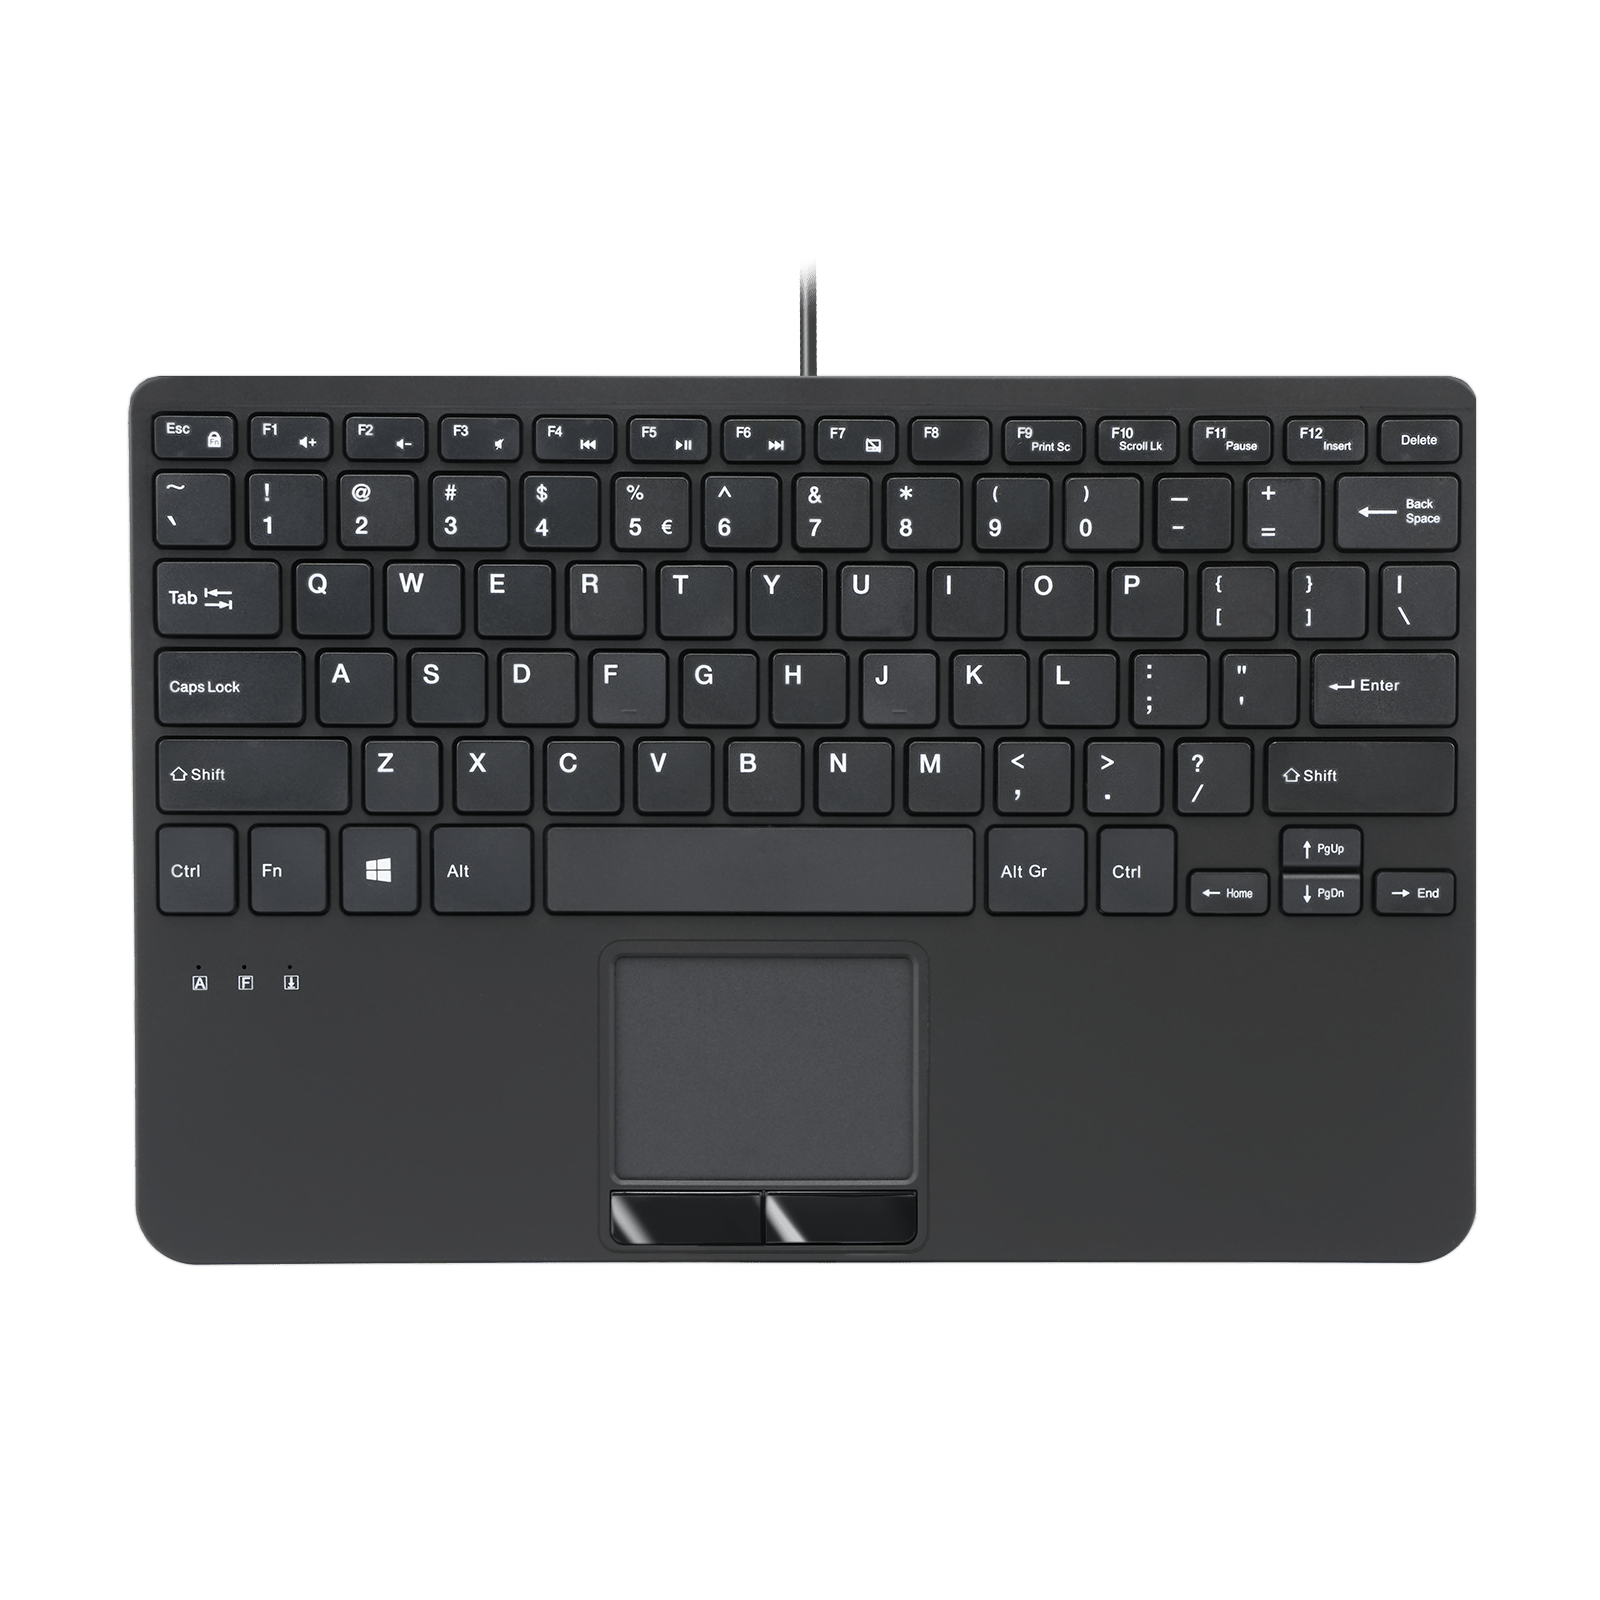 PERIBOARD-525 - Wired Mini USB Keyboard with Touchpad - Scissor Keys - Build-in 2 USB Ports - Perixx Europe